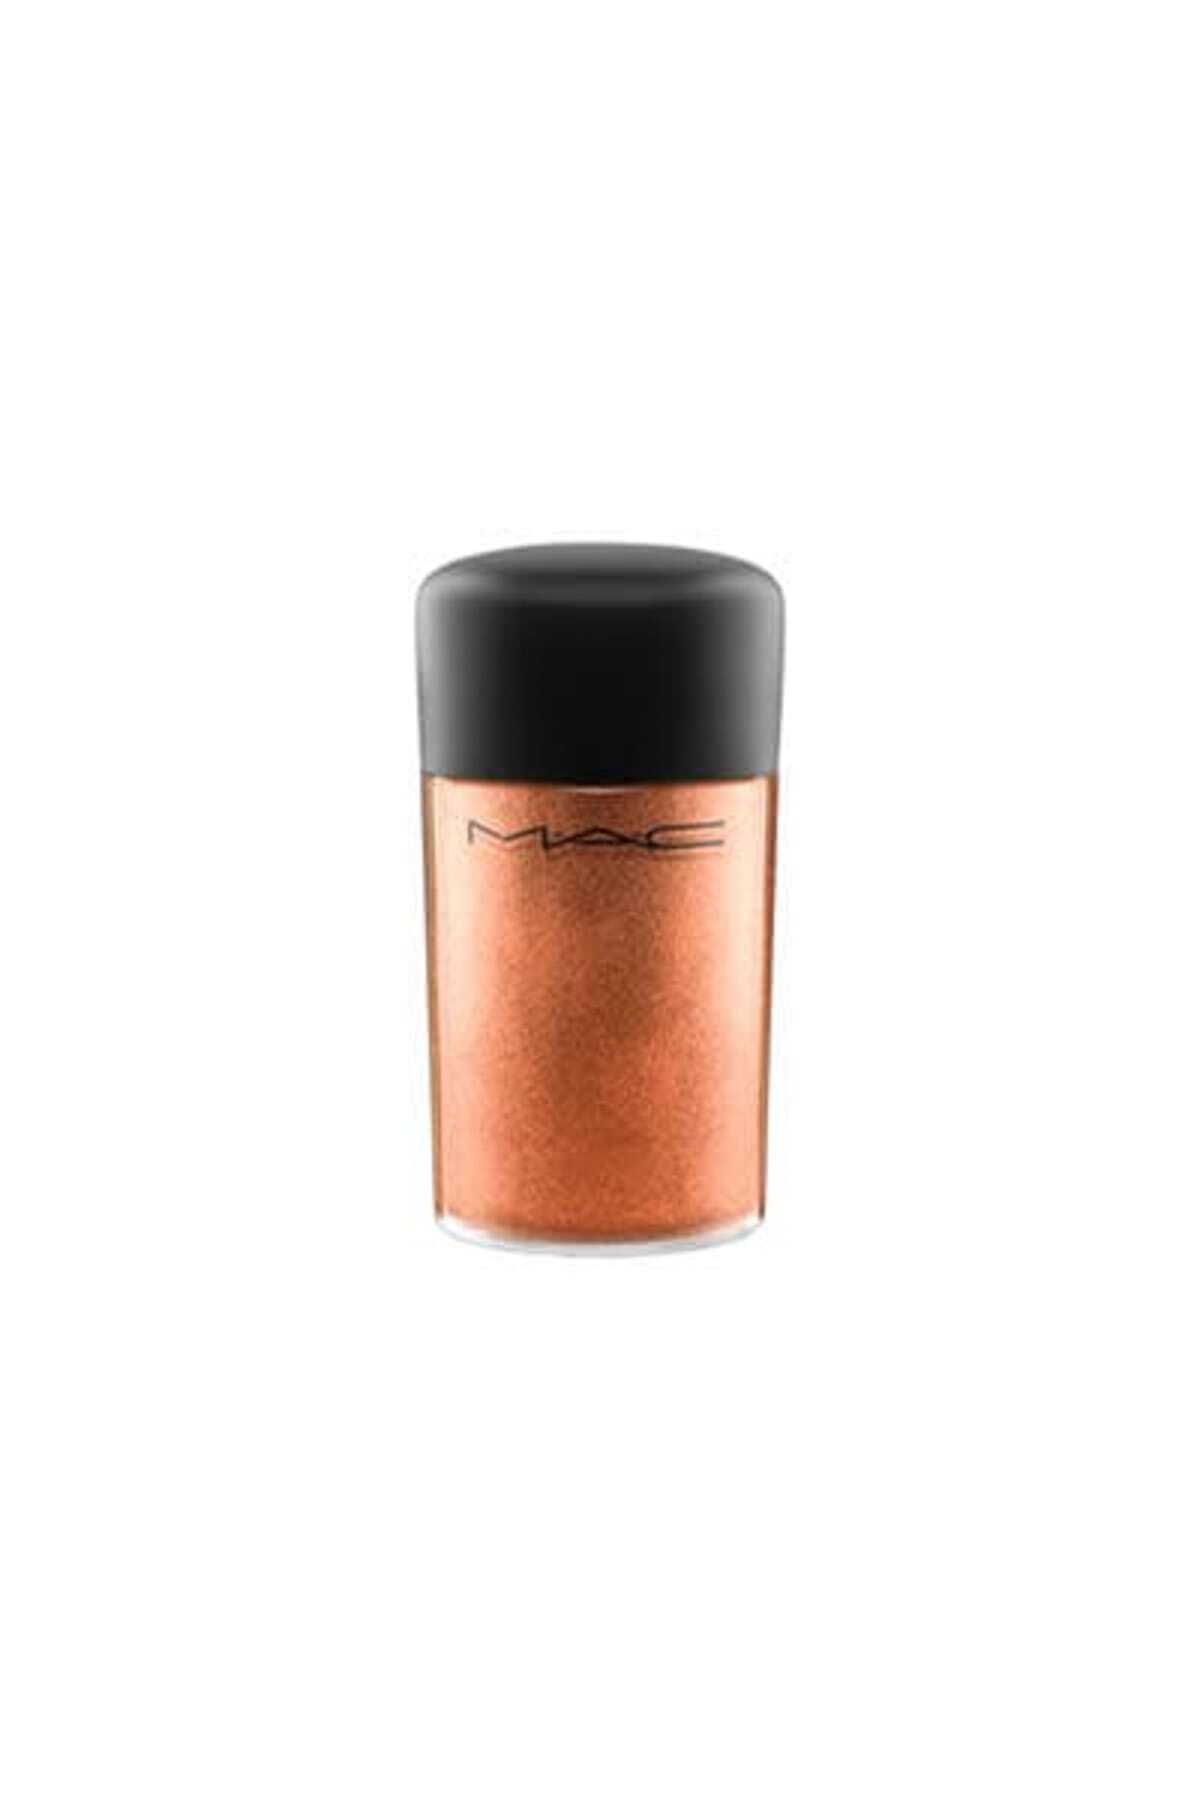 Mac Pigment - Eye Pigment Copper Sparkle 4.5 g 773602187133